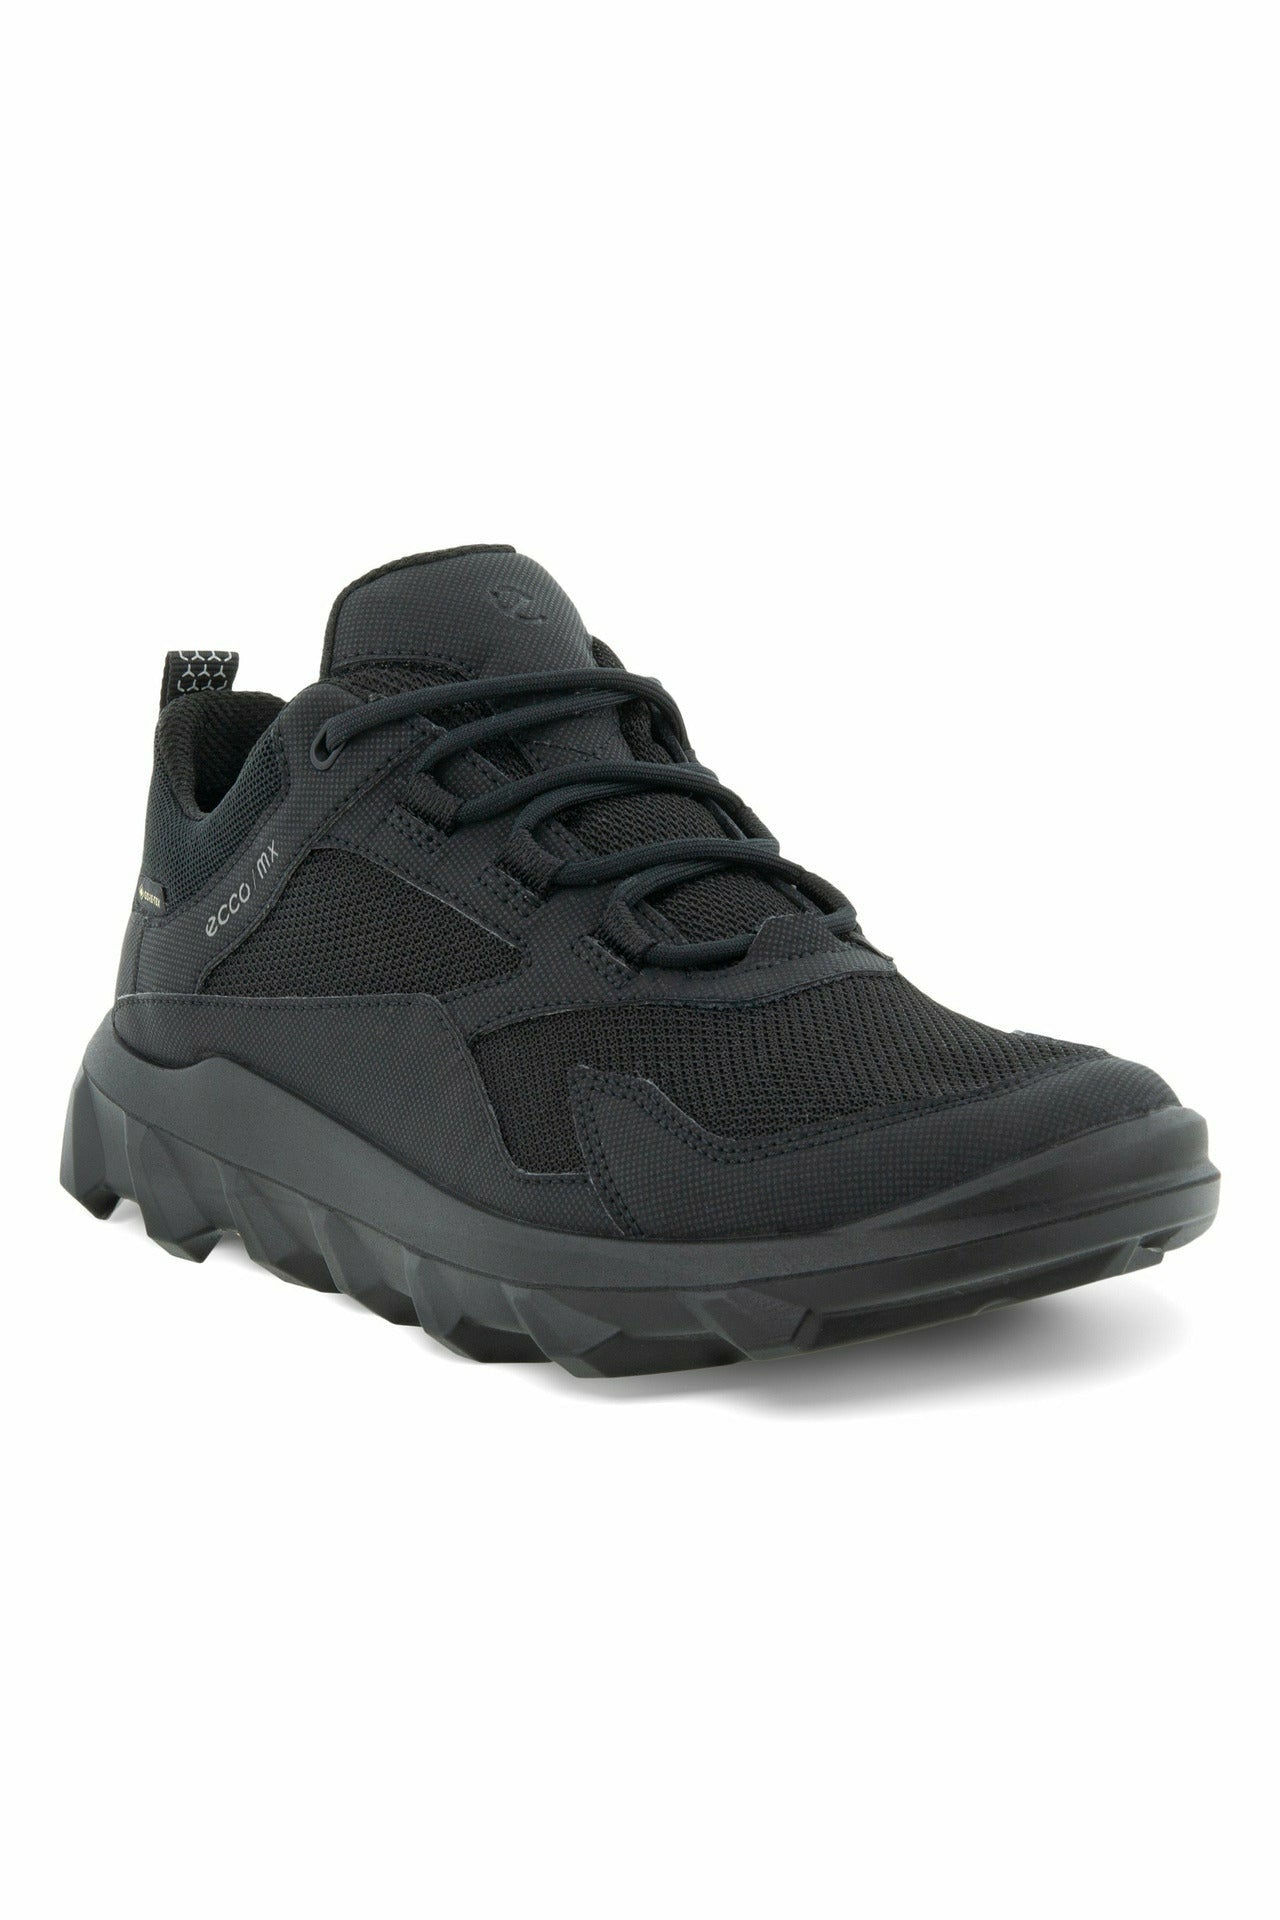 ECCO Mx Waterproof walking shoes 820193-51052